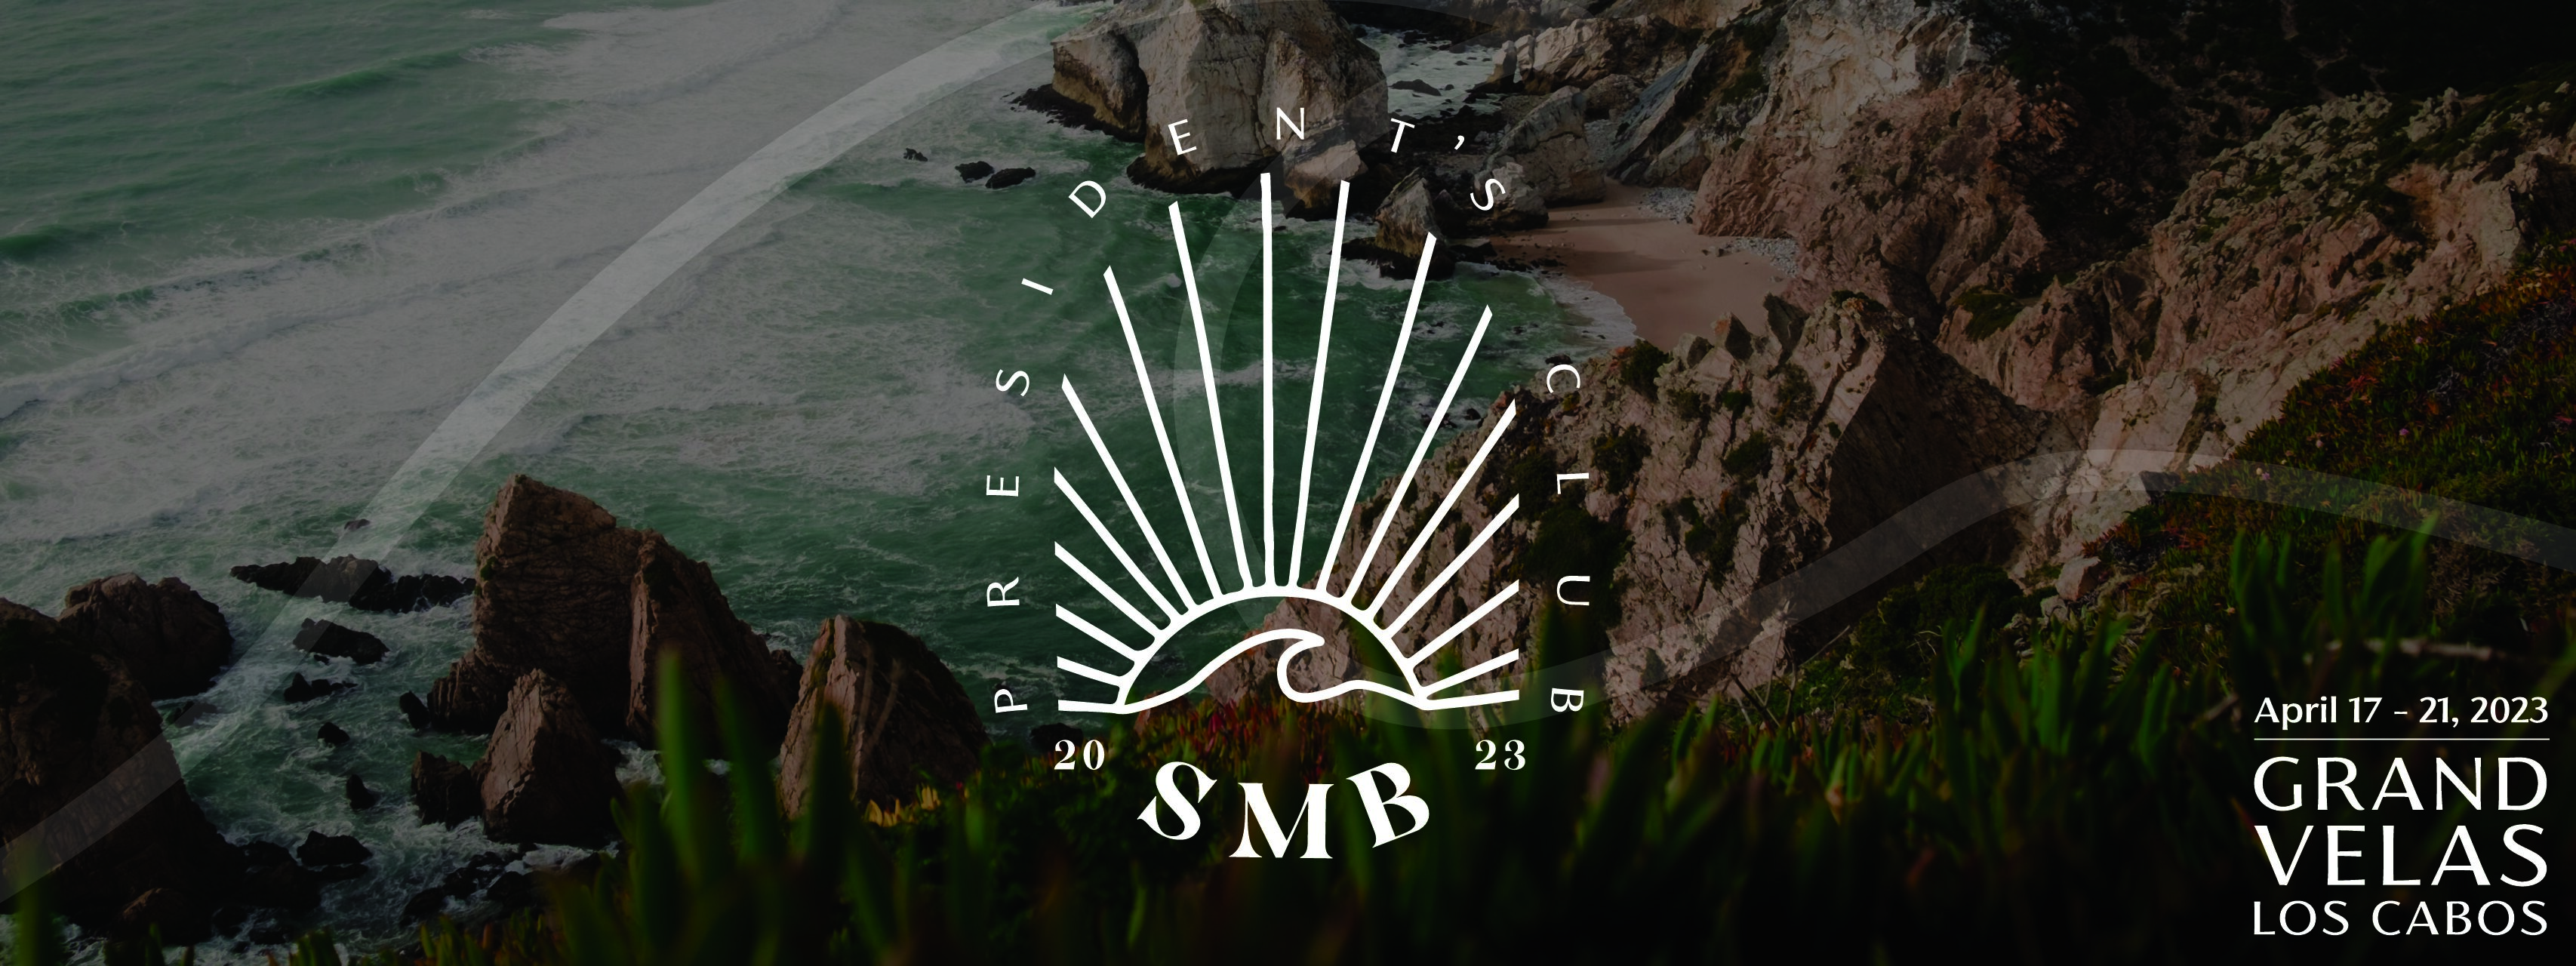 SMB President's Club Slide Deck v1.0 (dragged) 5